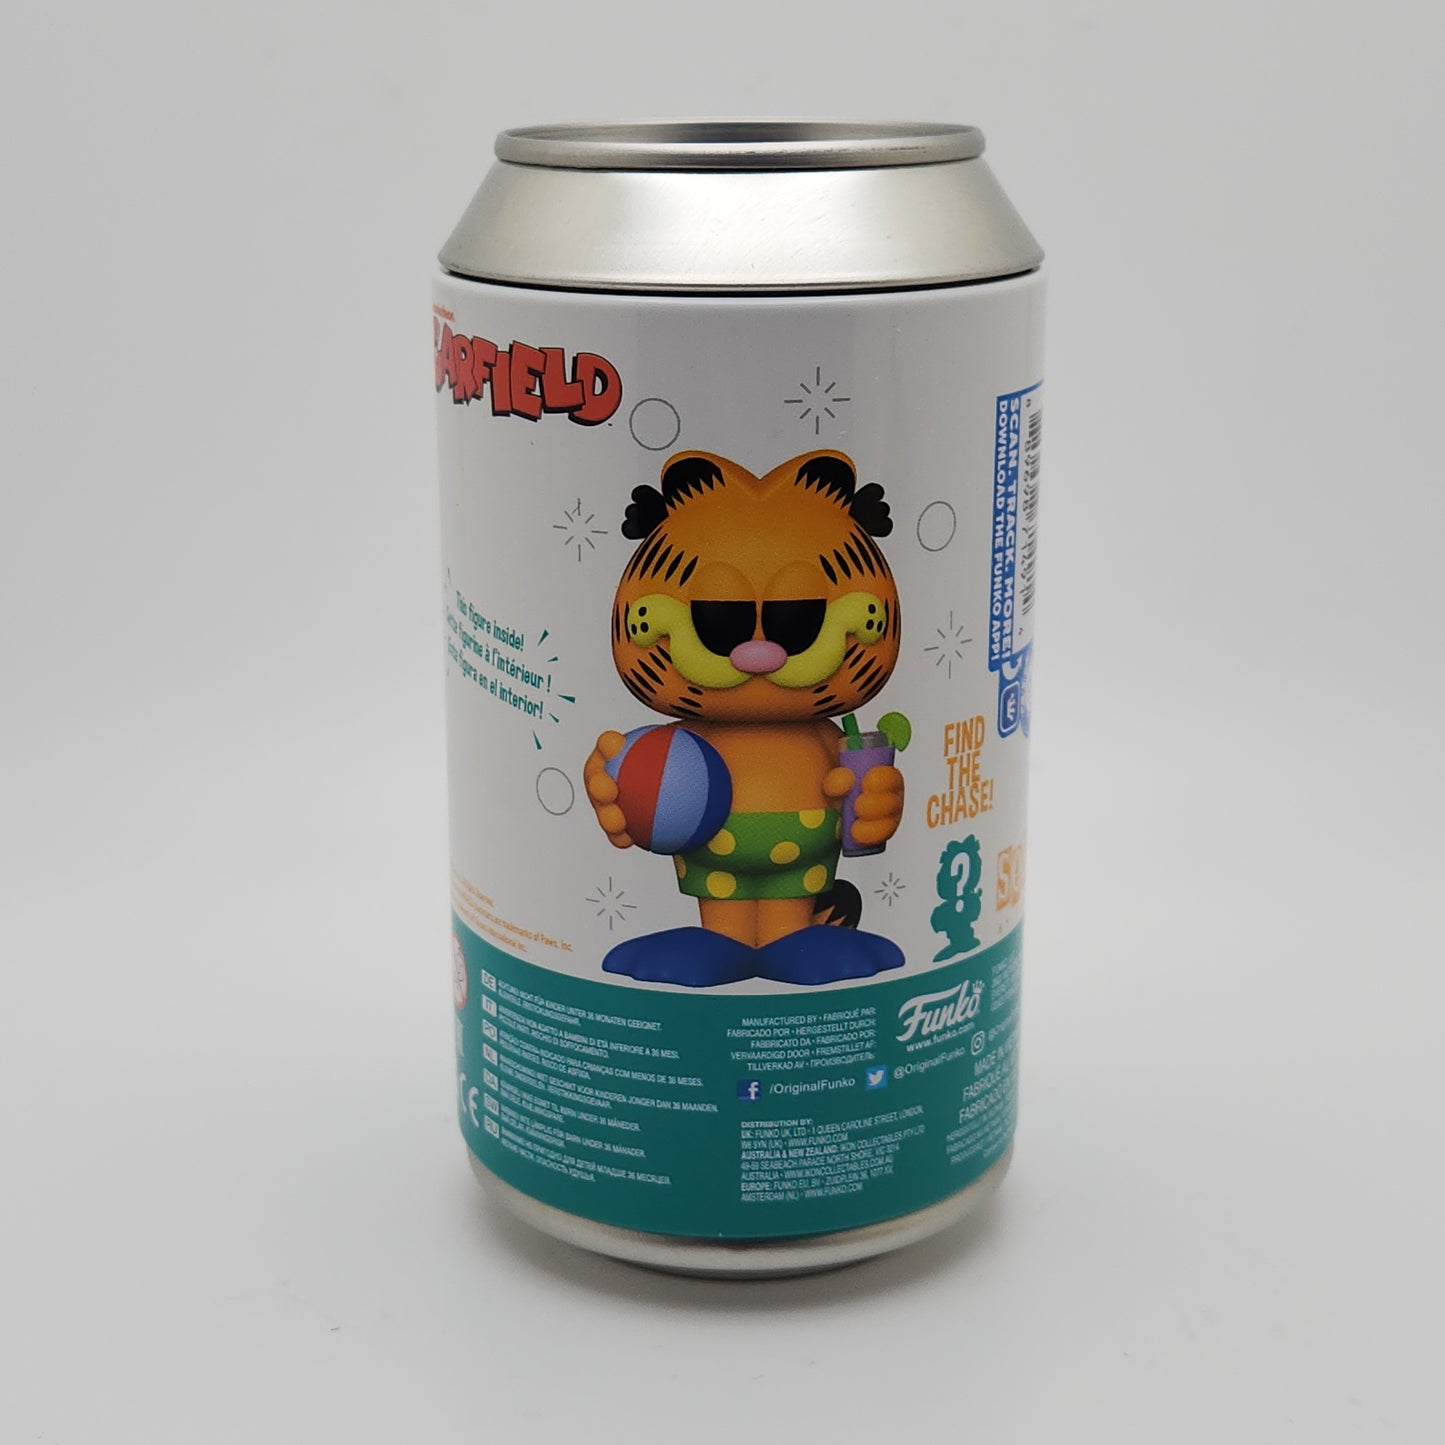 Funko Soda! Television- Garfield (Flocked Chase)